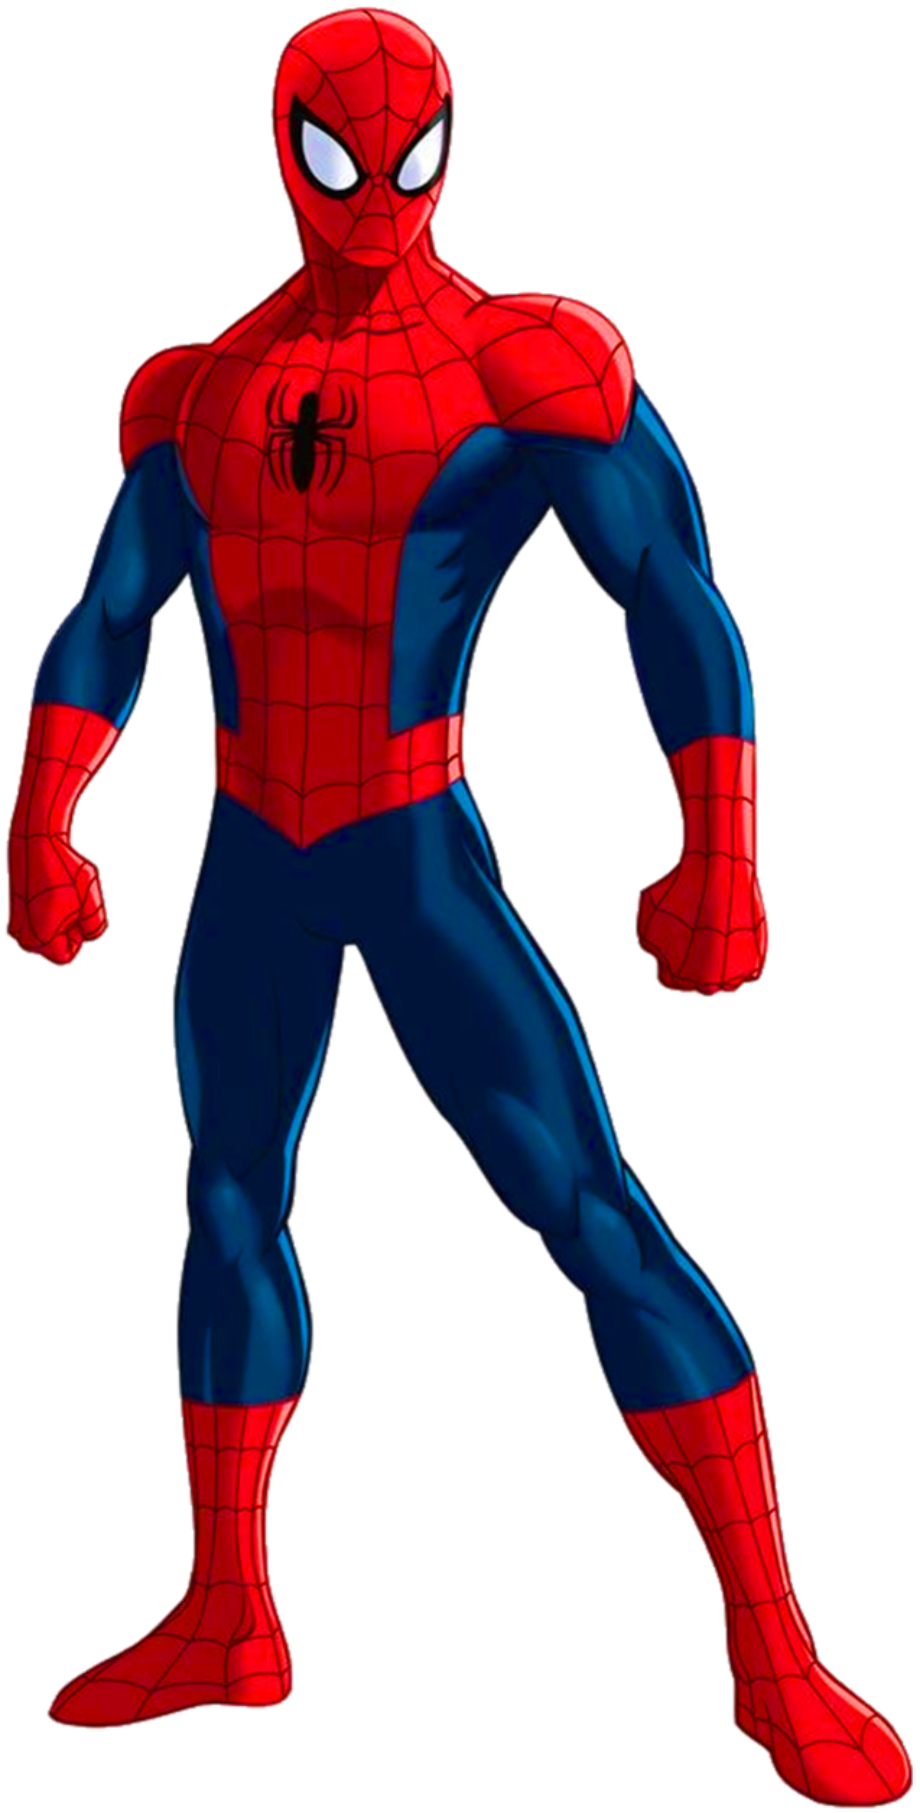 Spiderman standing